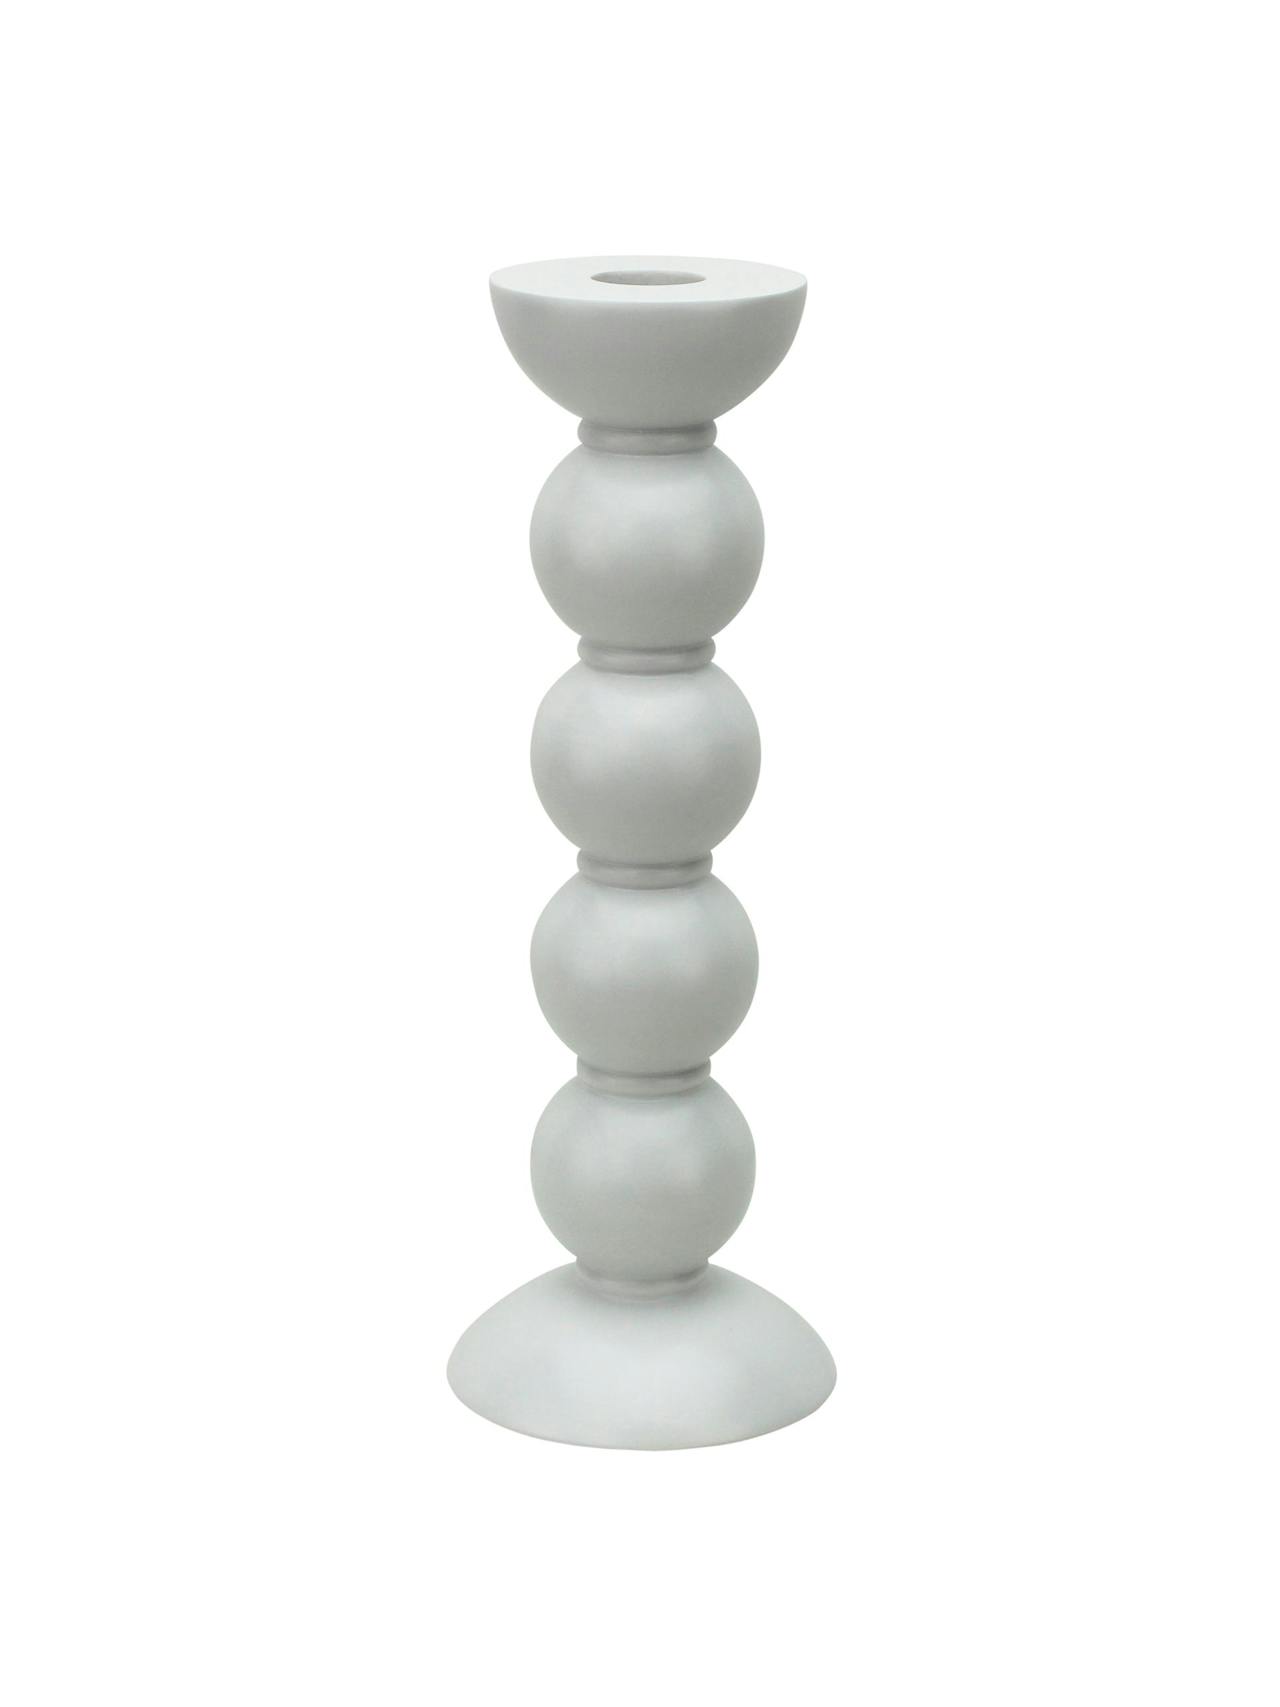 Tall bobbin candlestick in white